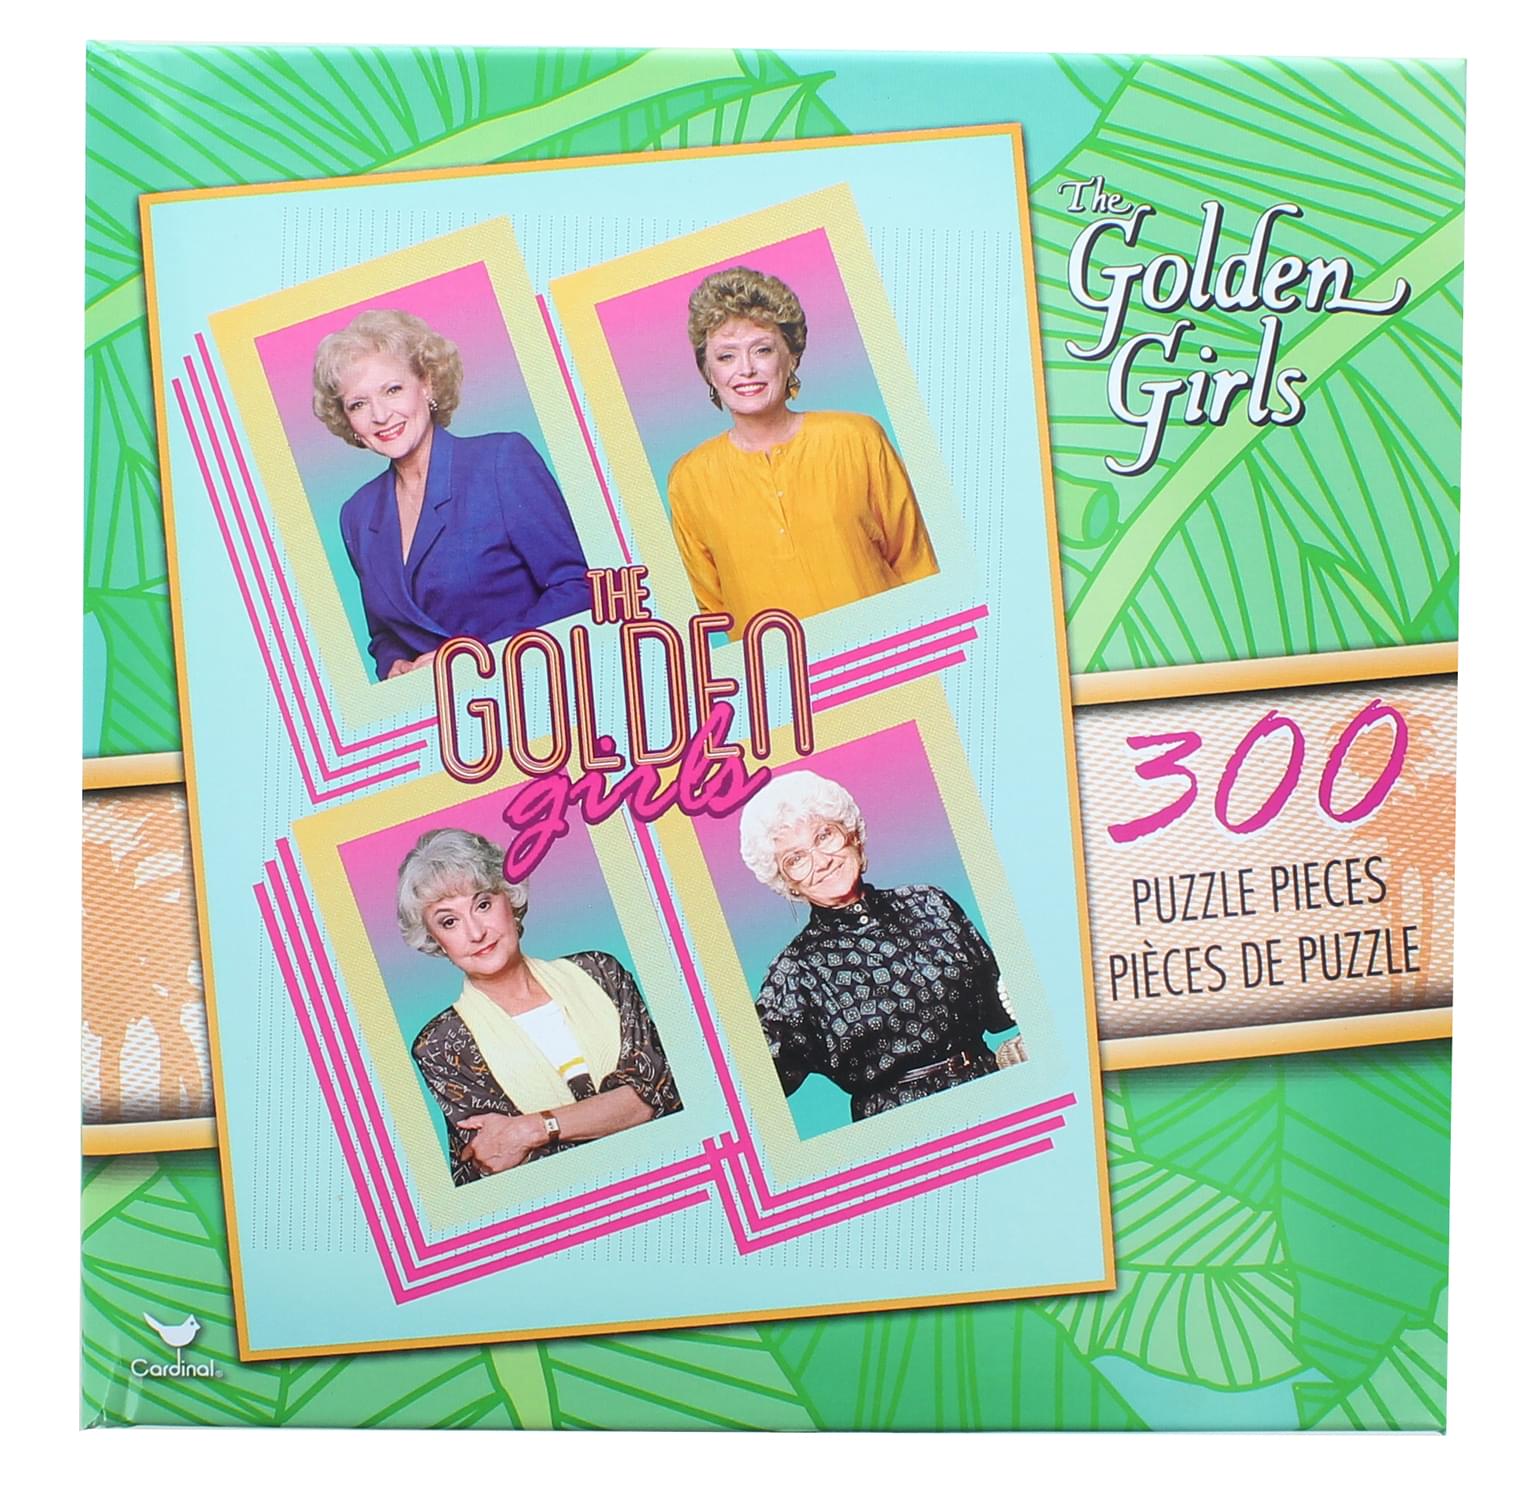 The Golden Girls Four Corners 300 Puzzle Pieces Cardinal 18x24